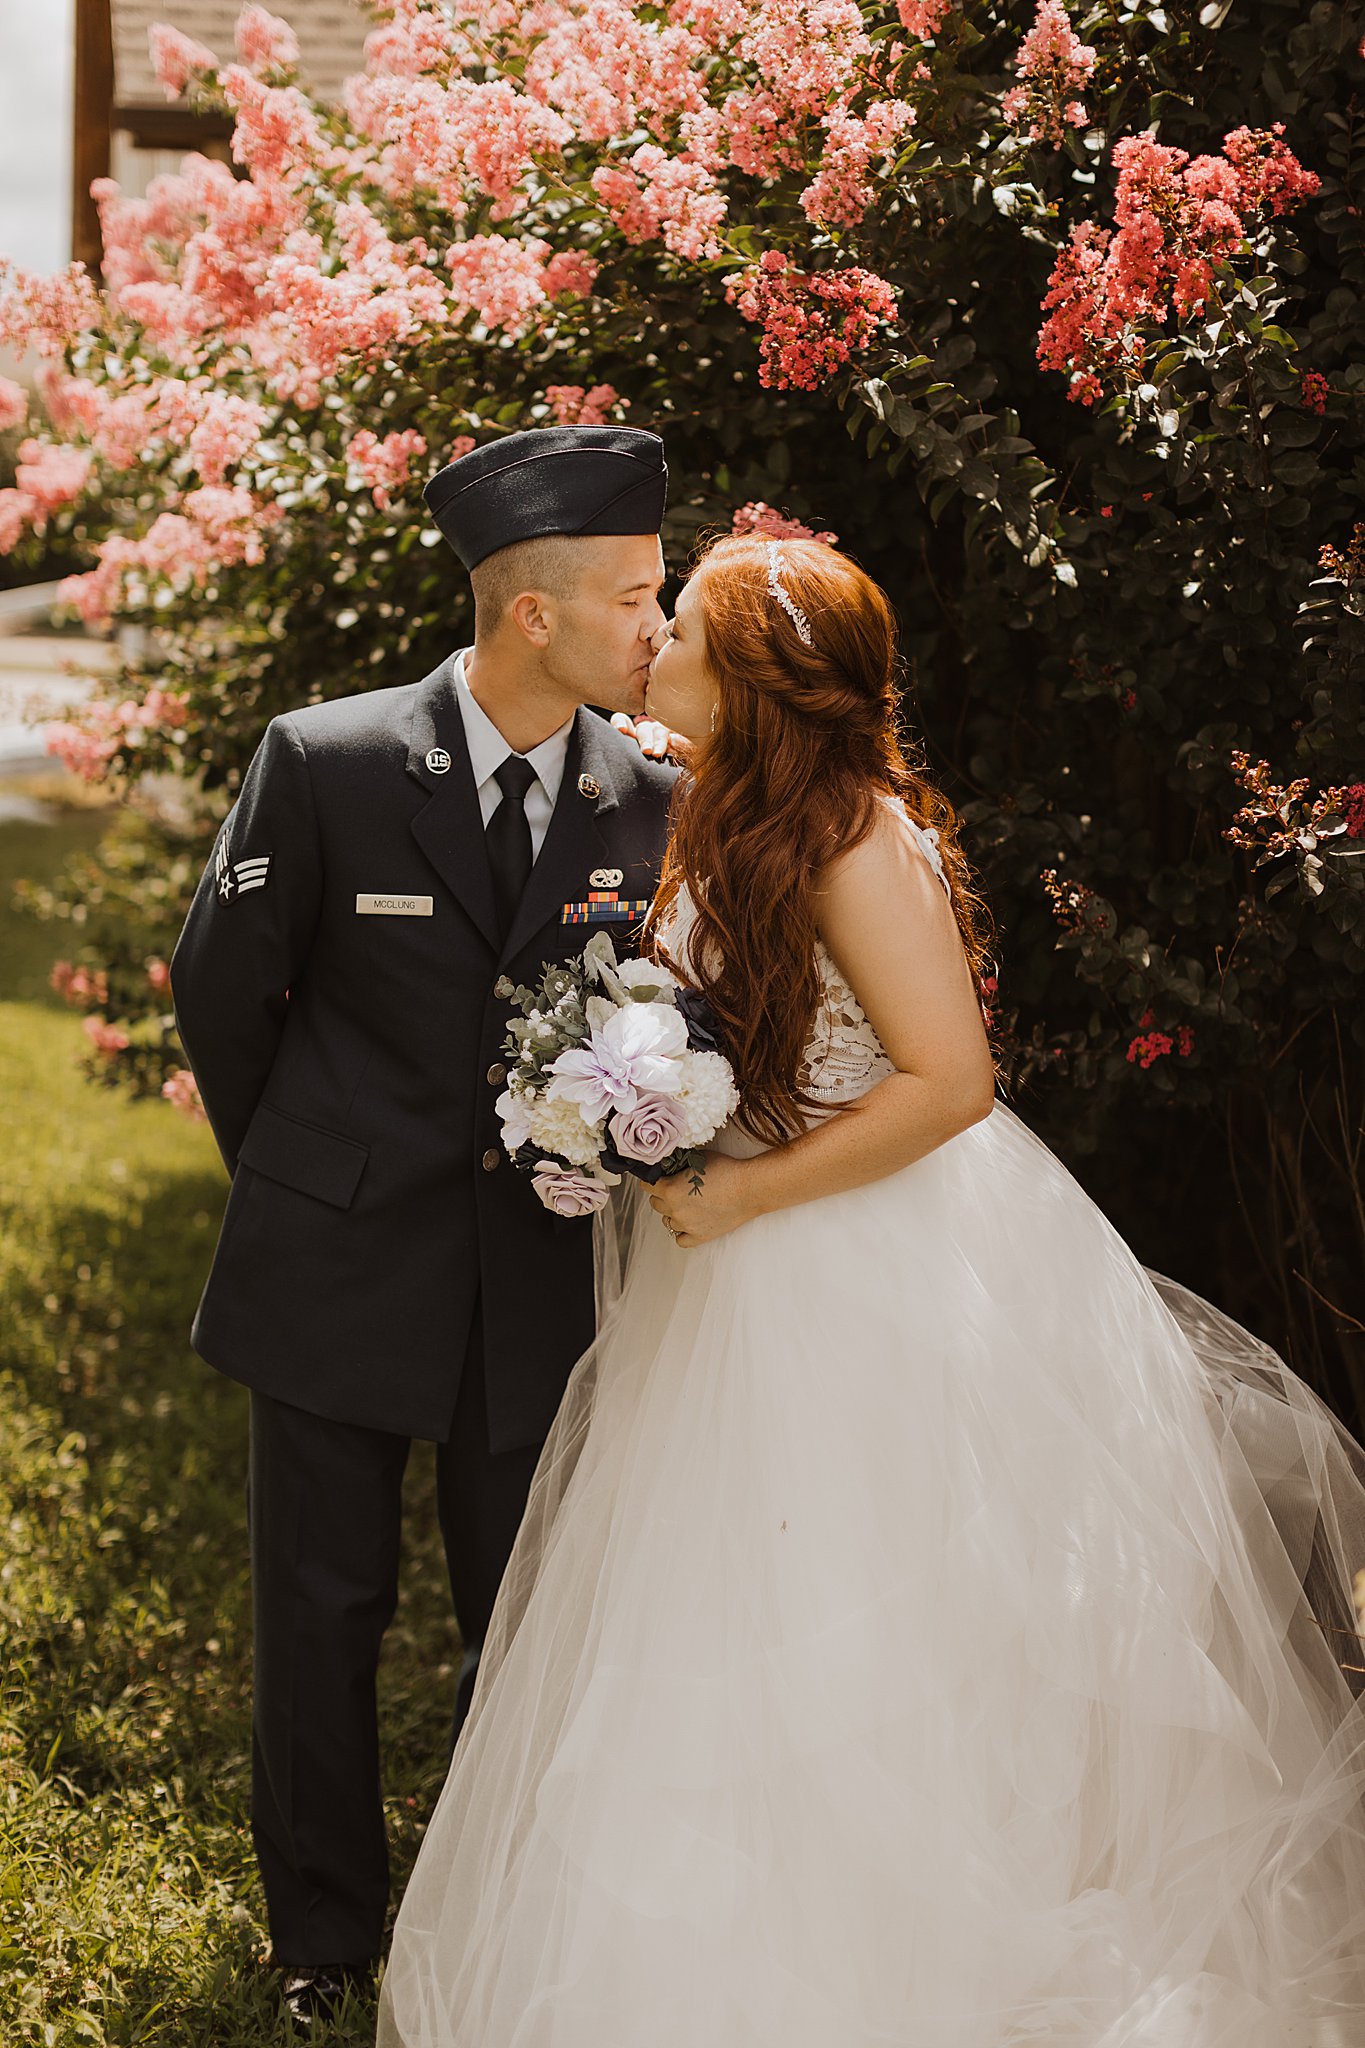 STL Wedding Photographer | Bride and Groom Photos